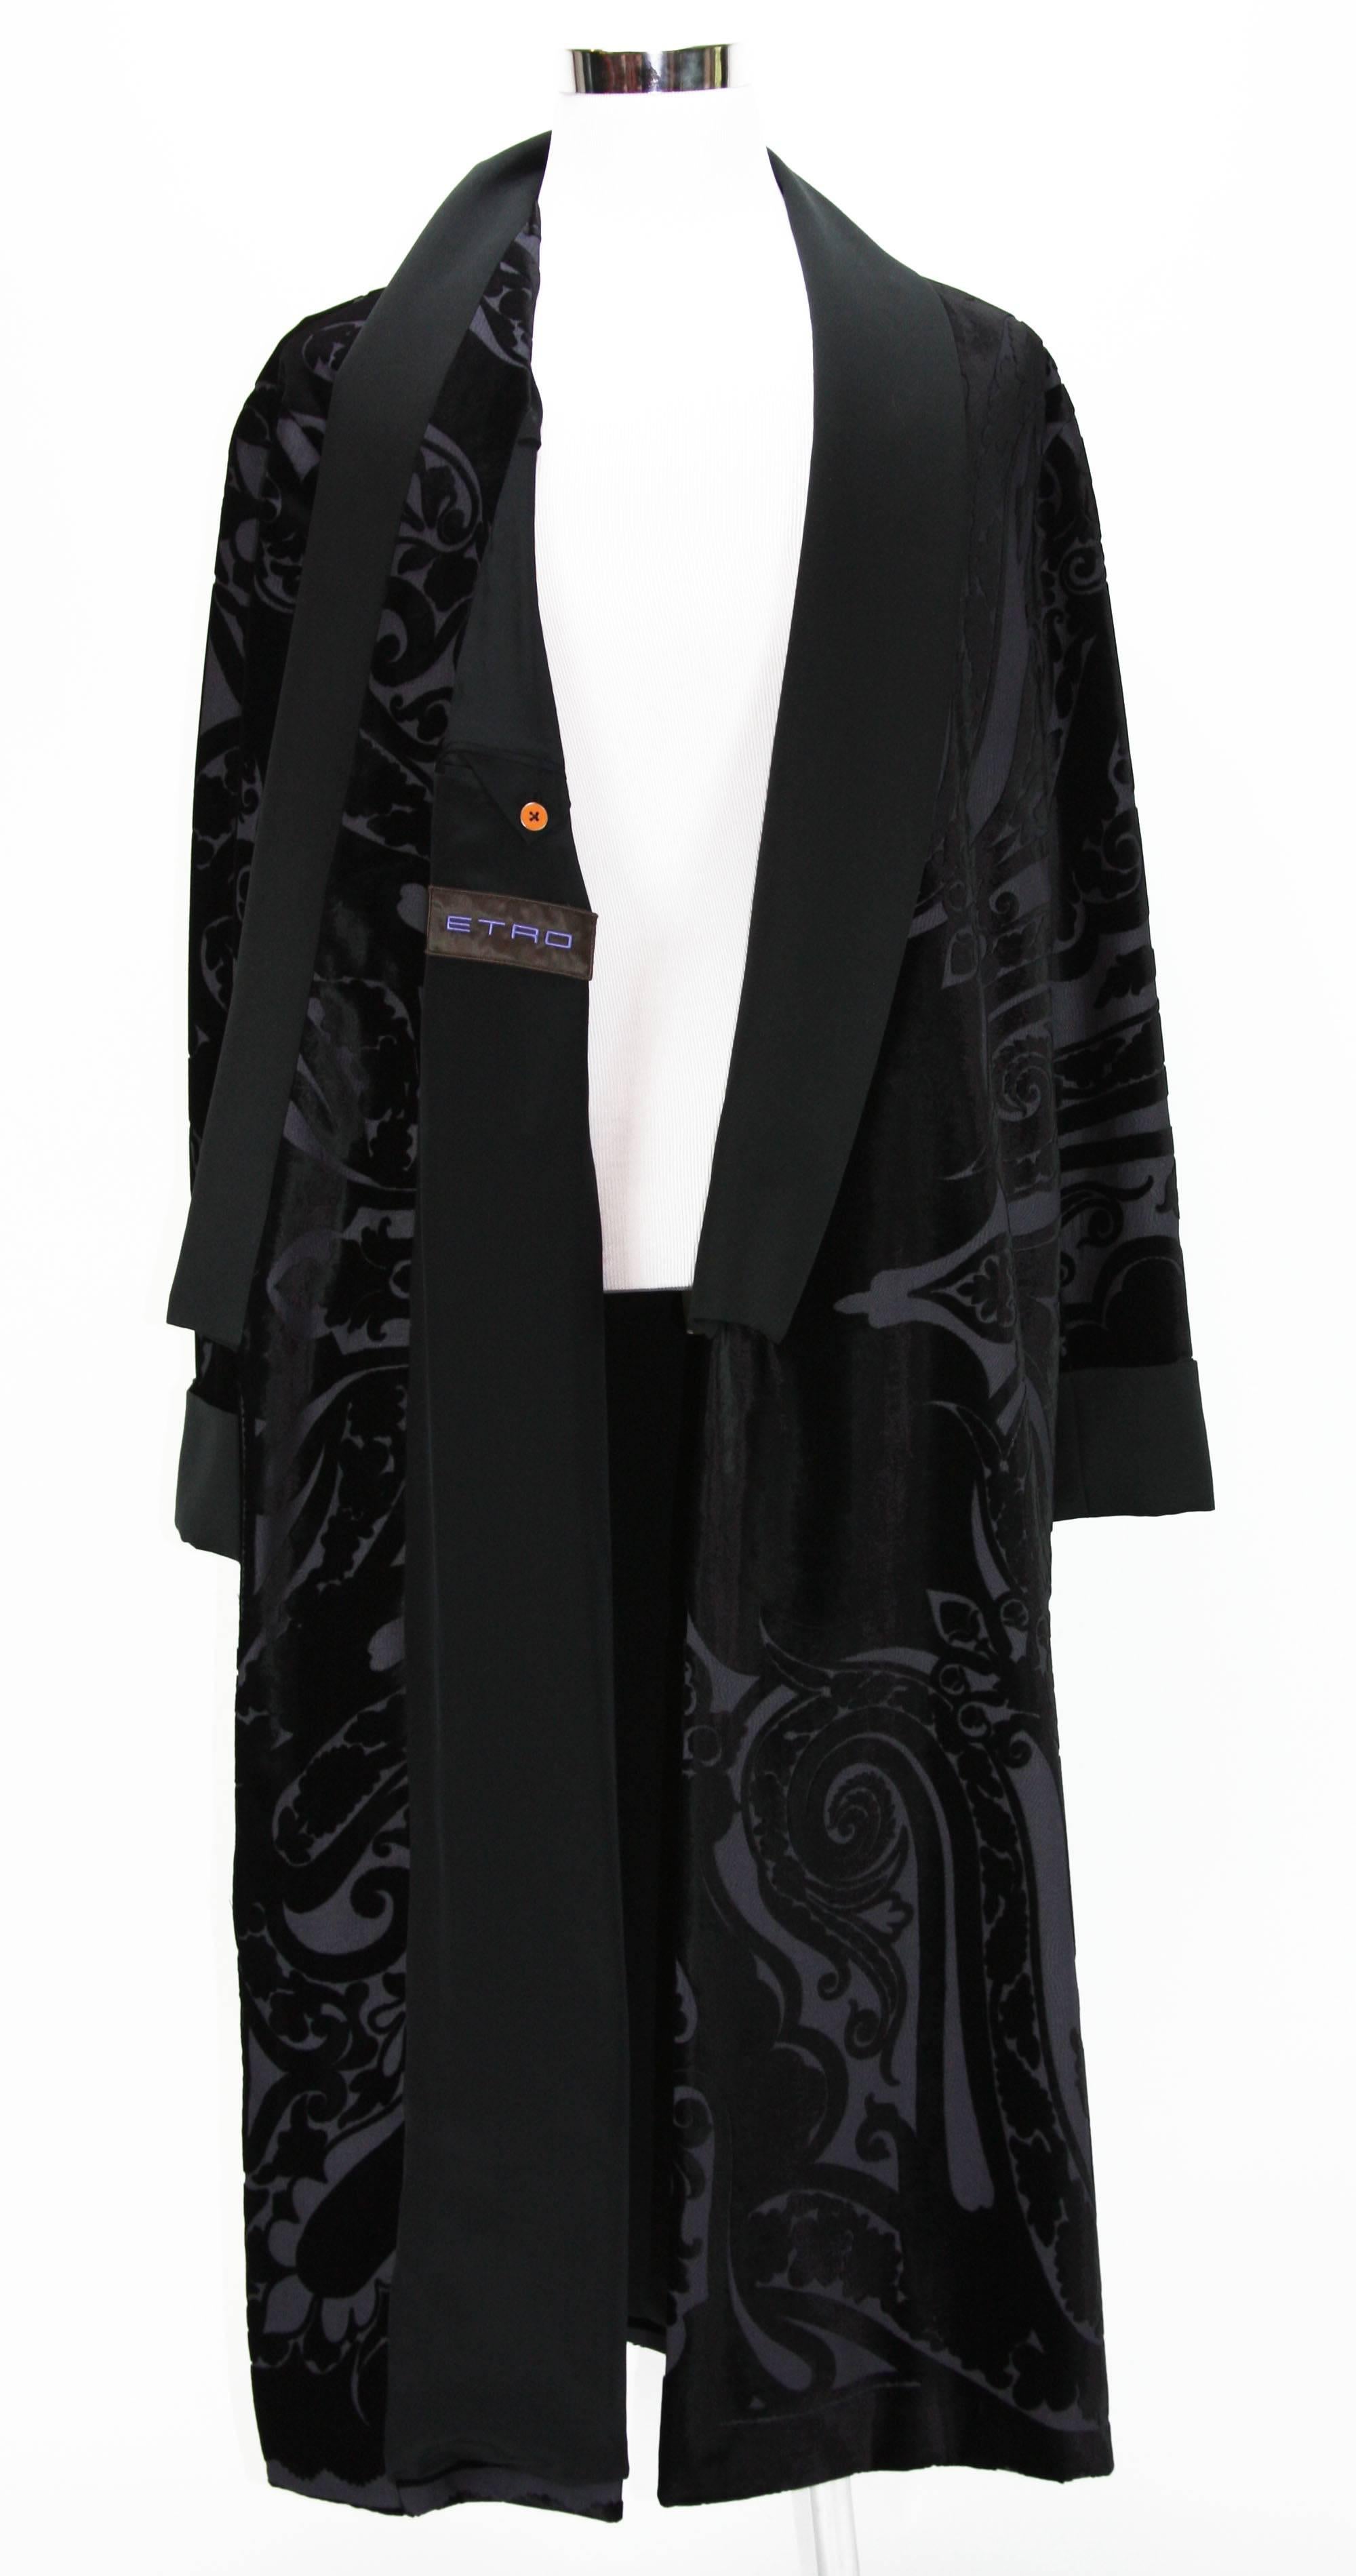 New ETRO Runway Men's Robe Kimono Coat Black Velvet Satin Lapel 2